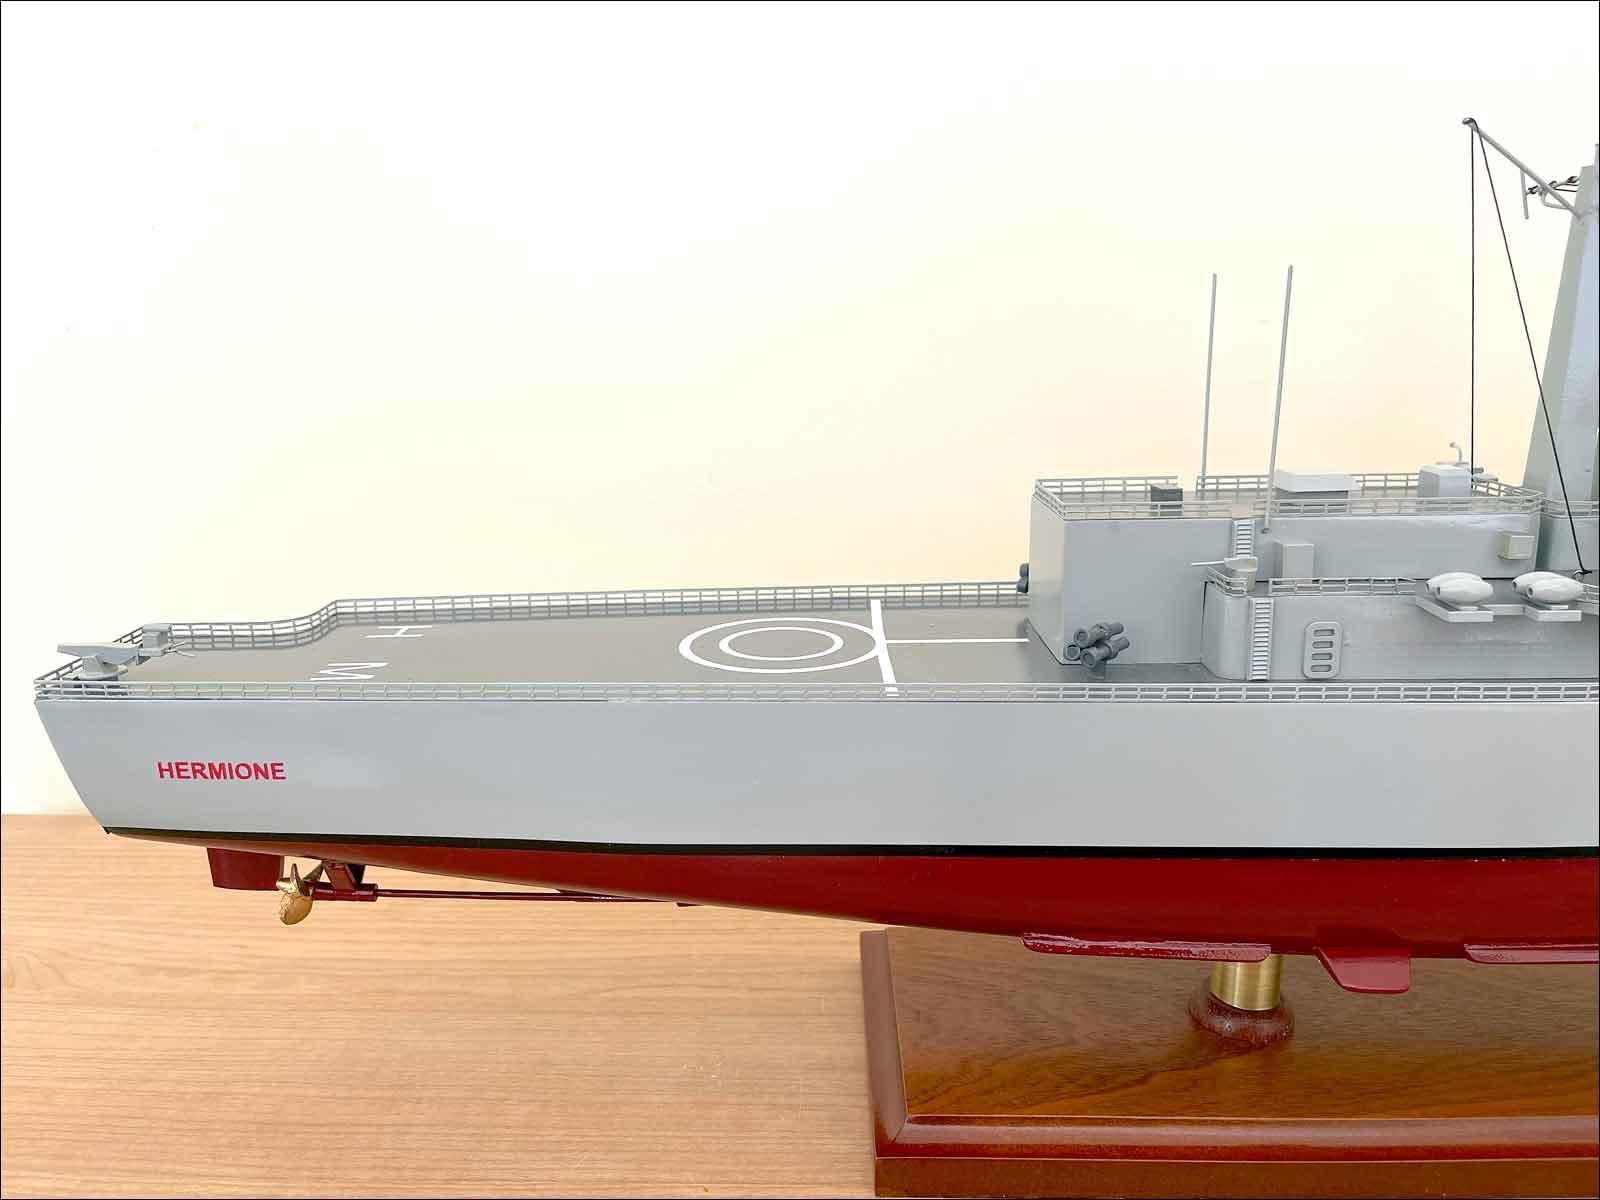 model battleship HMS Hermione (F58)